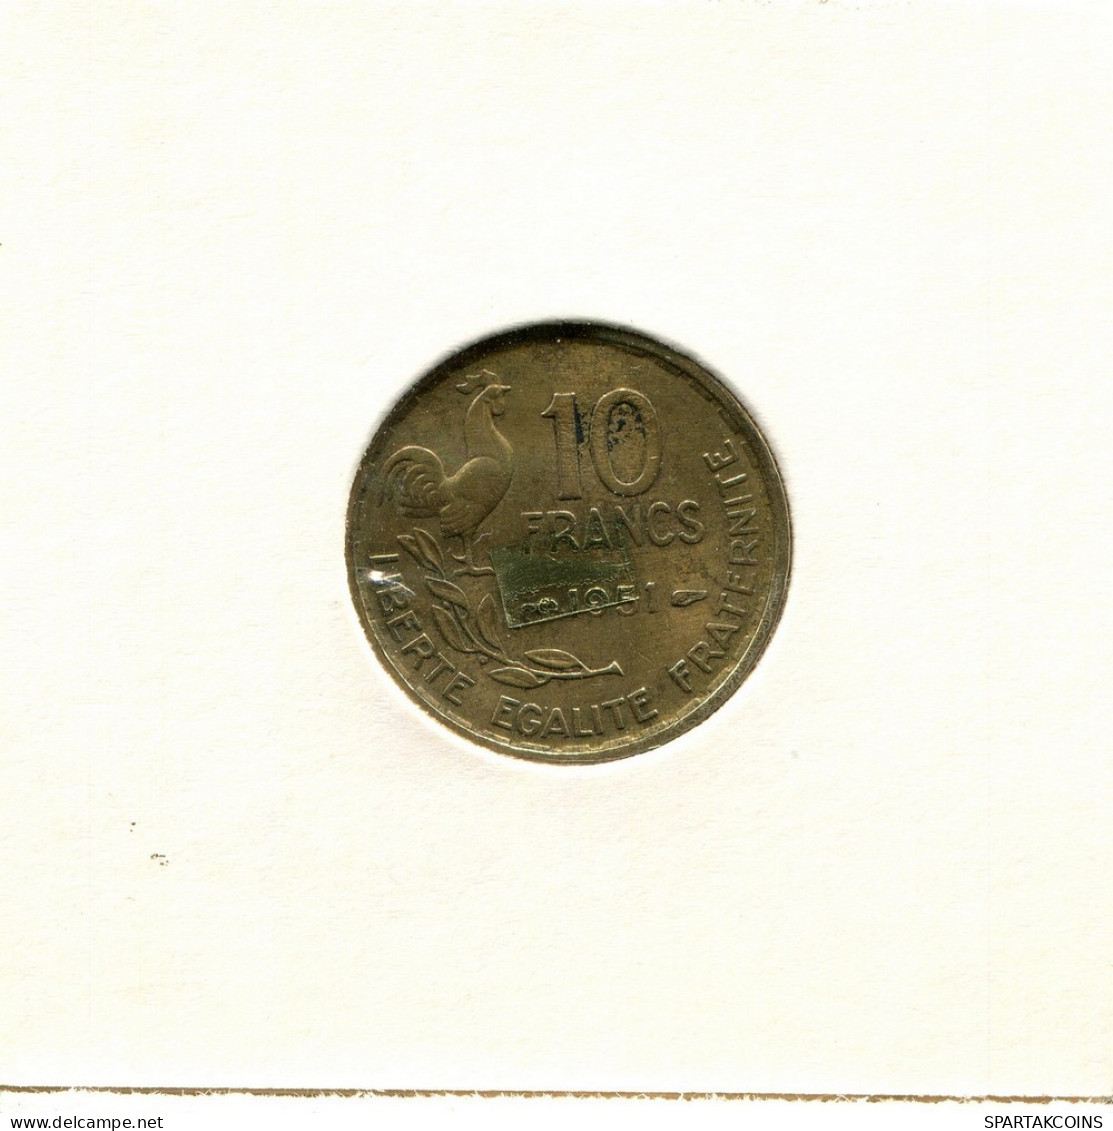 10 FRANCS 1951 FRANKREICH FRANCE Französisch Münze #BB612.D.A - 10 Francs